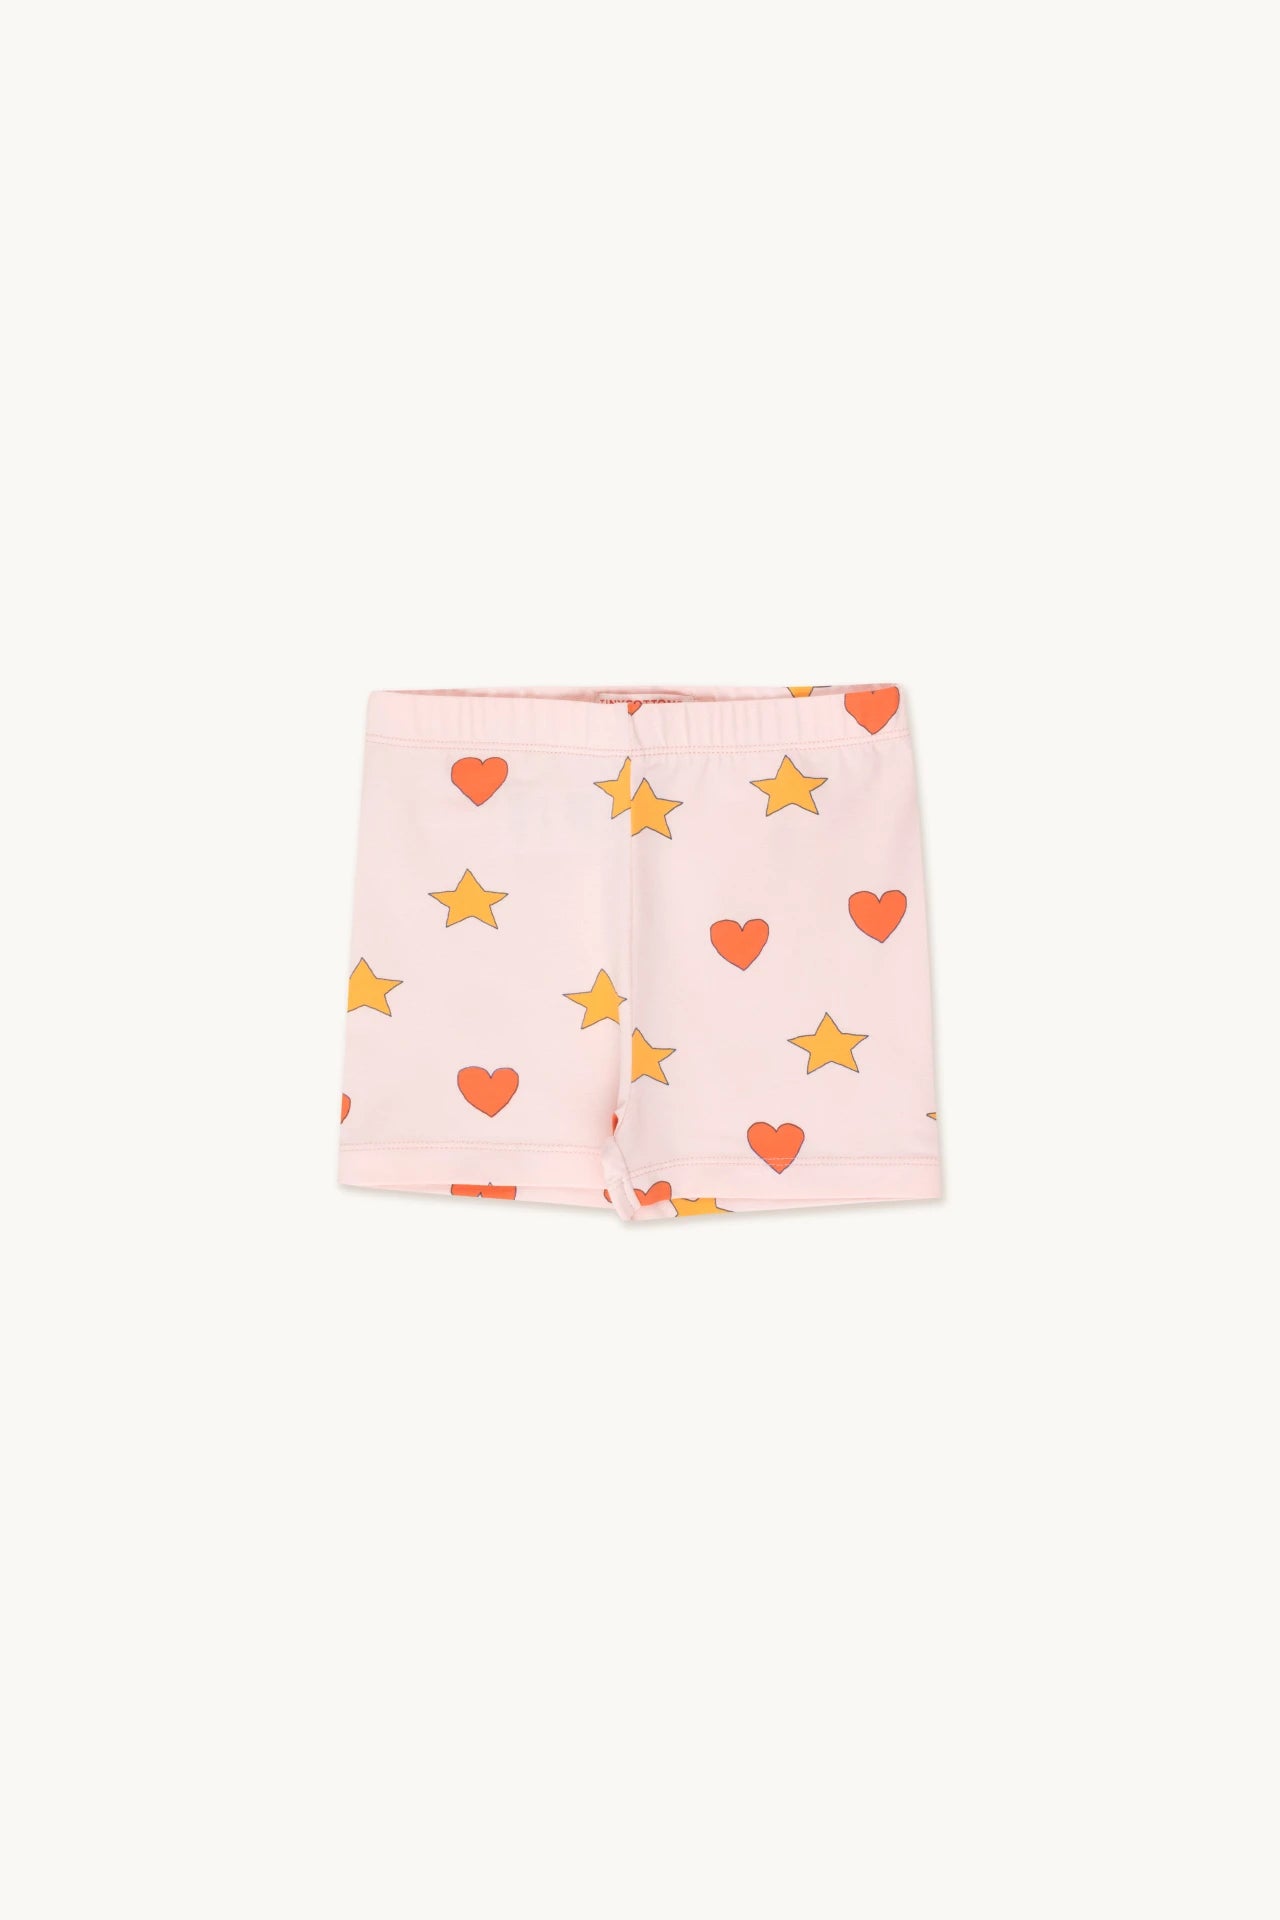 Tiny Cottons - Hearts and Stars Short